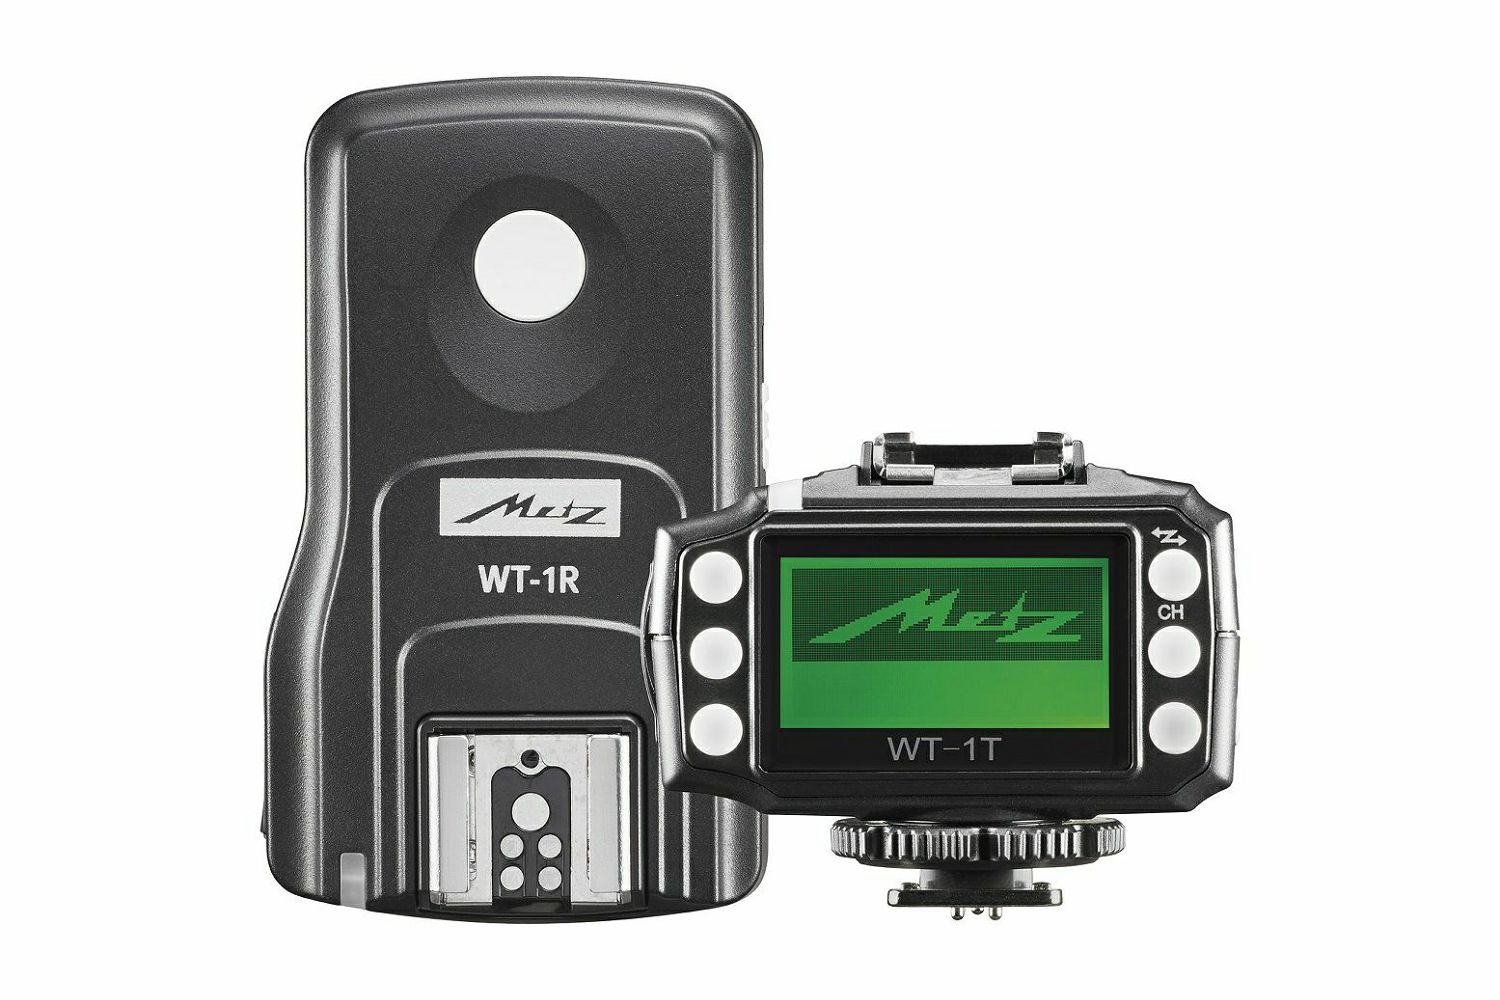 Metz WT-1 TTL HSS KIT komplet odašiljač + prijemnik za Sony Flash wireless Trigger set okidača za bljeskalicu